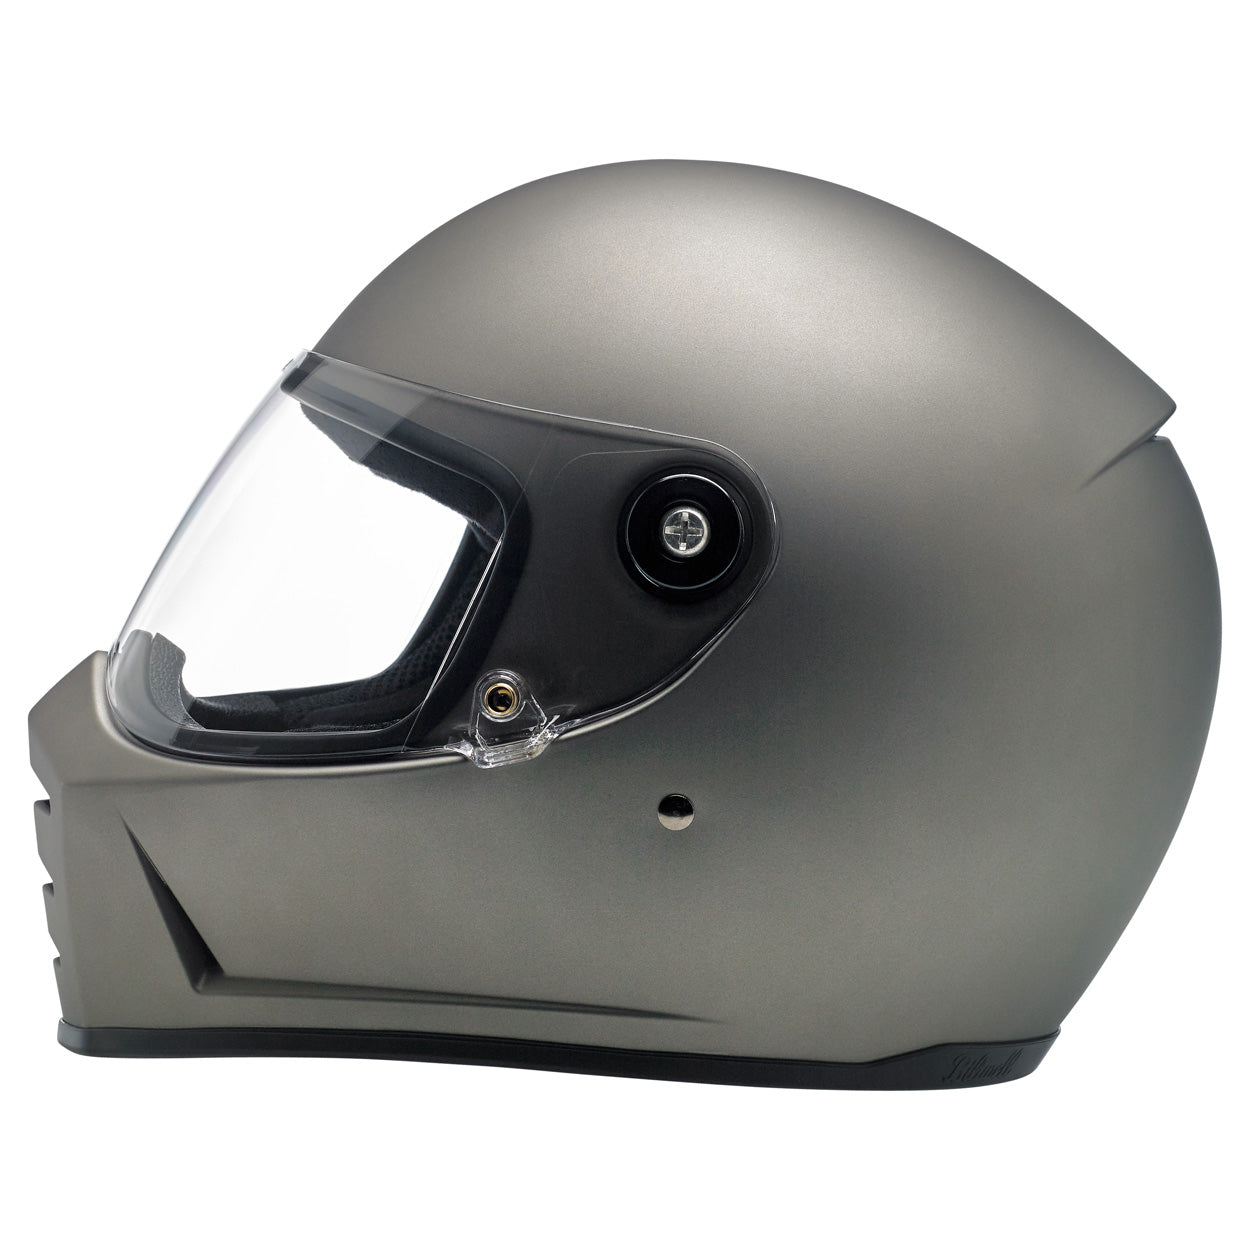 CLOSEOUT Lane Splitter ECE R22.05 Helmet - Flat Titanium